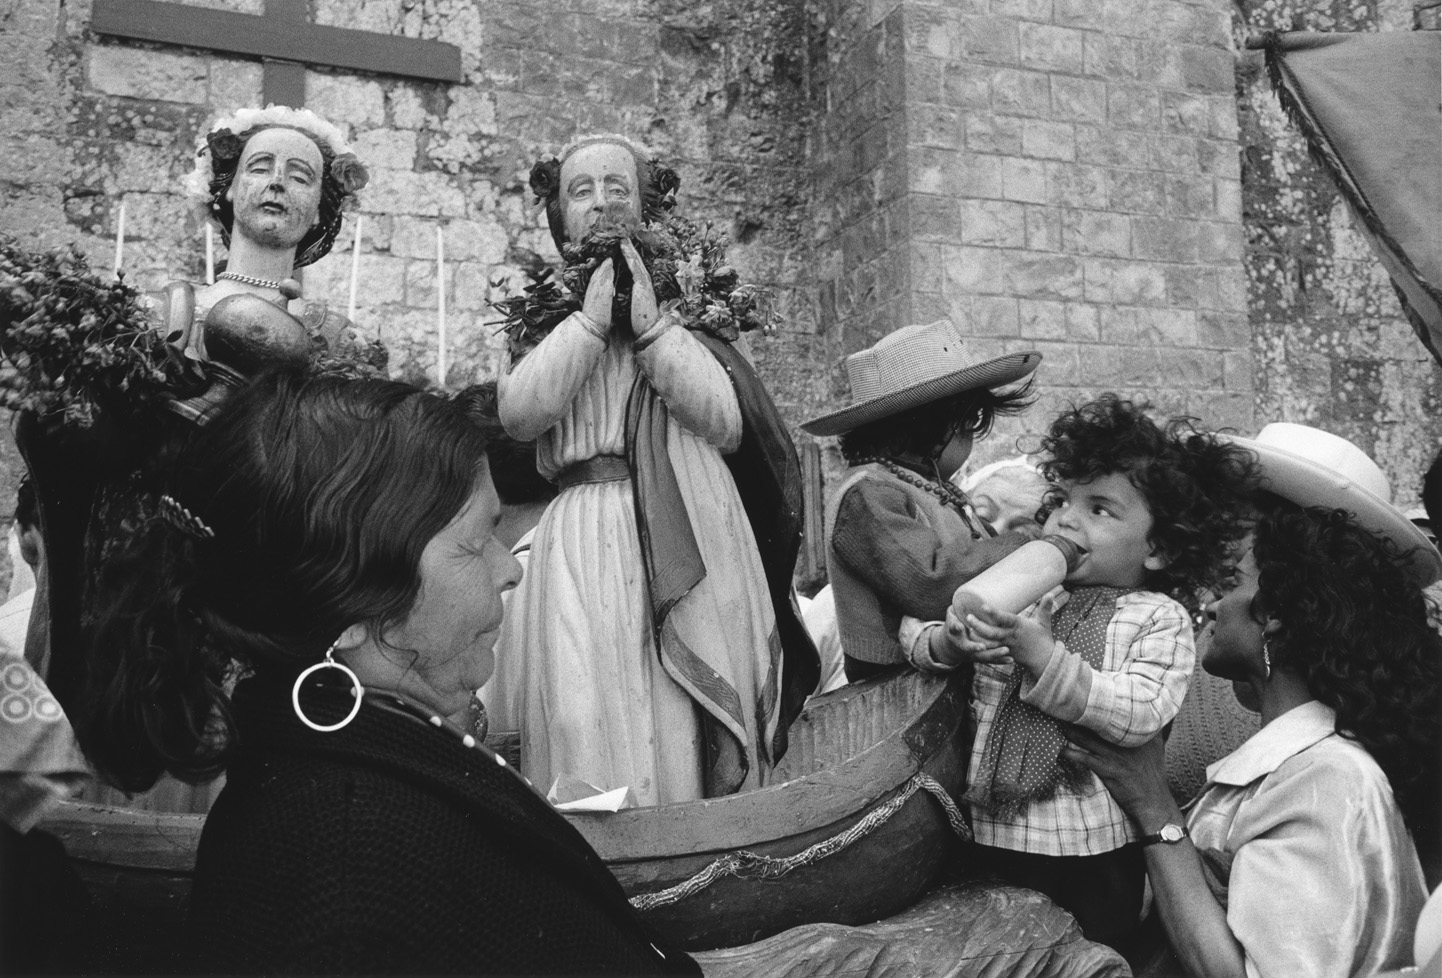 Famille de gitans, Pélerinage des Saintes-Maries-de-la-Mer, 1960